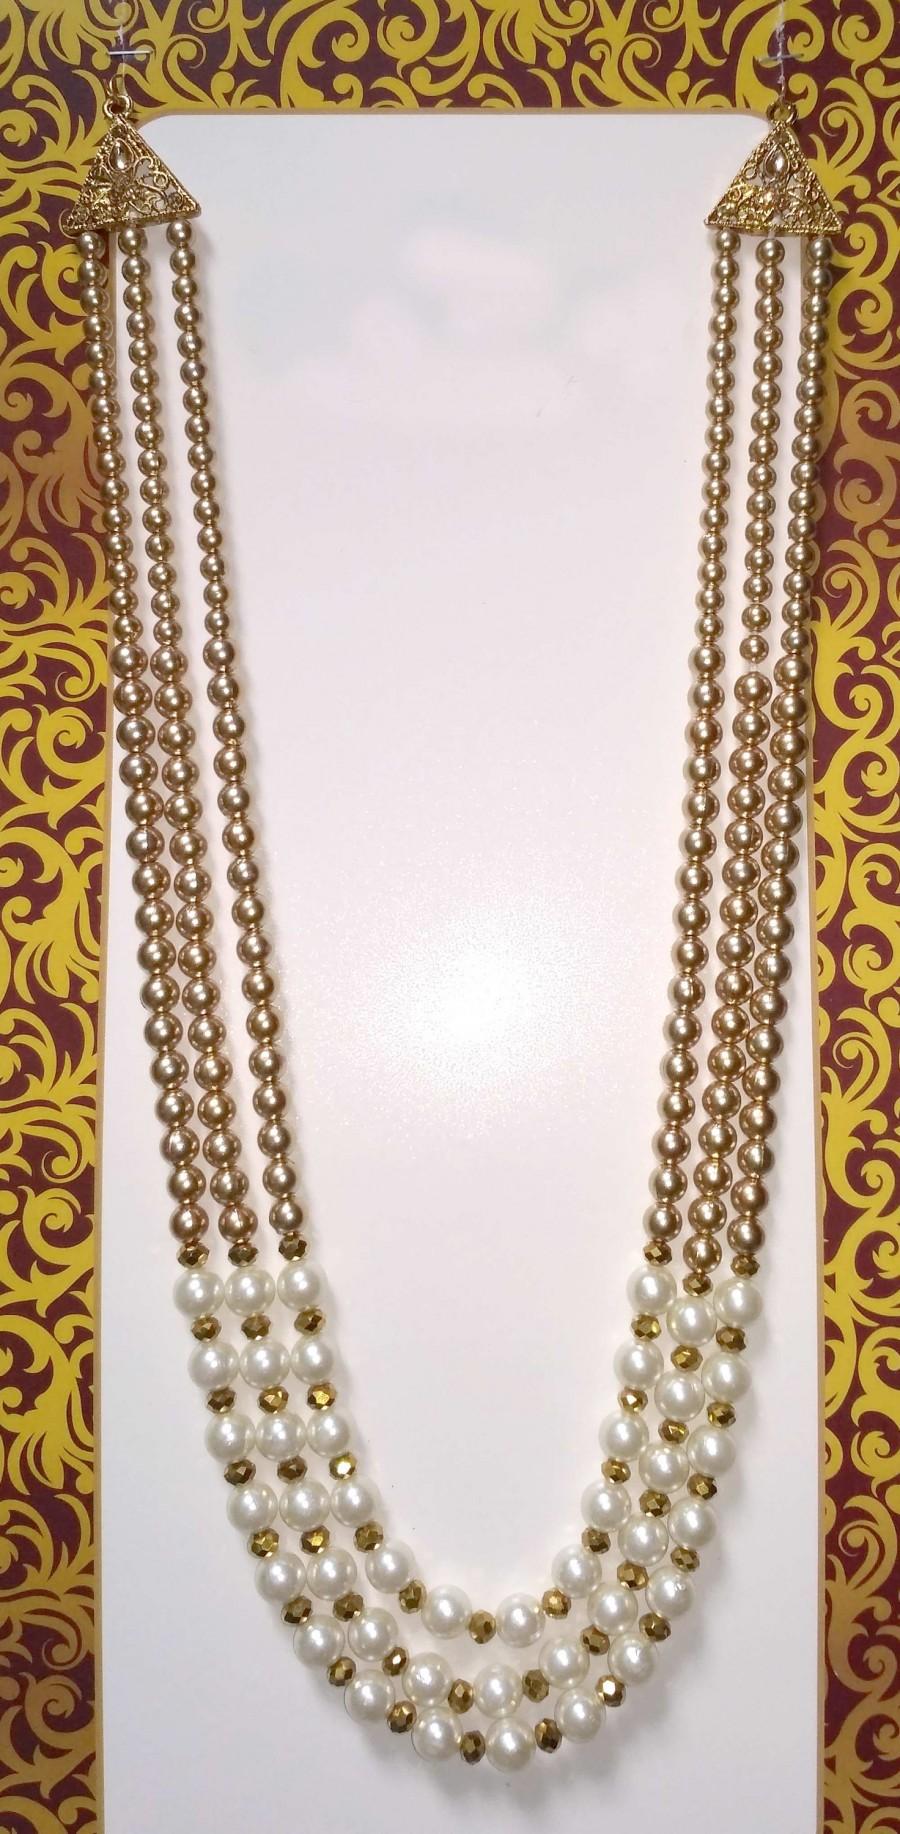 زفاف - Embellished Colored Premium Pearl Jewelry Necklace For Men/Groom For Wedding Wear (Dulhe Ki Mala)